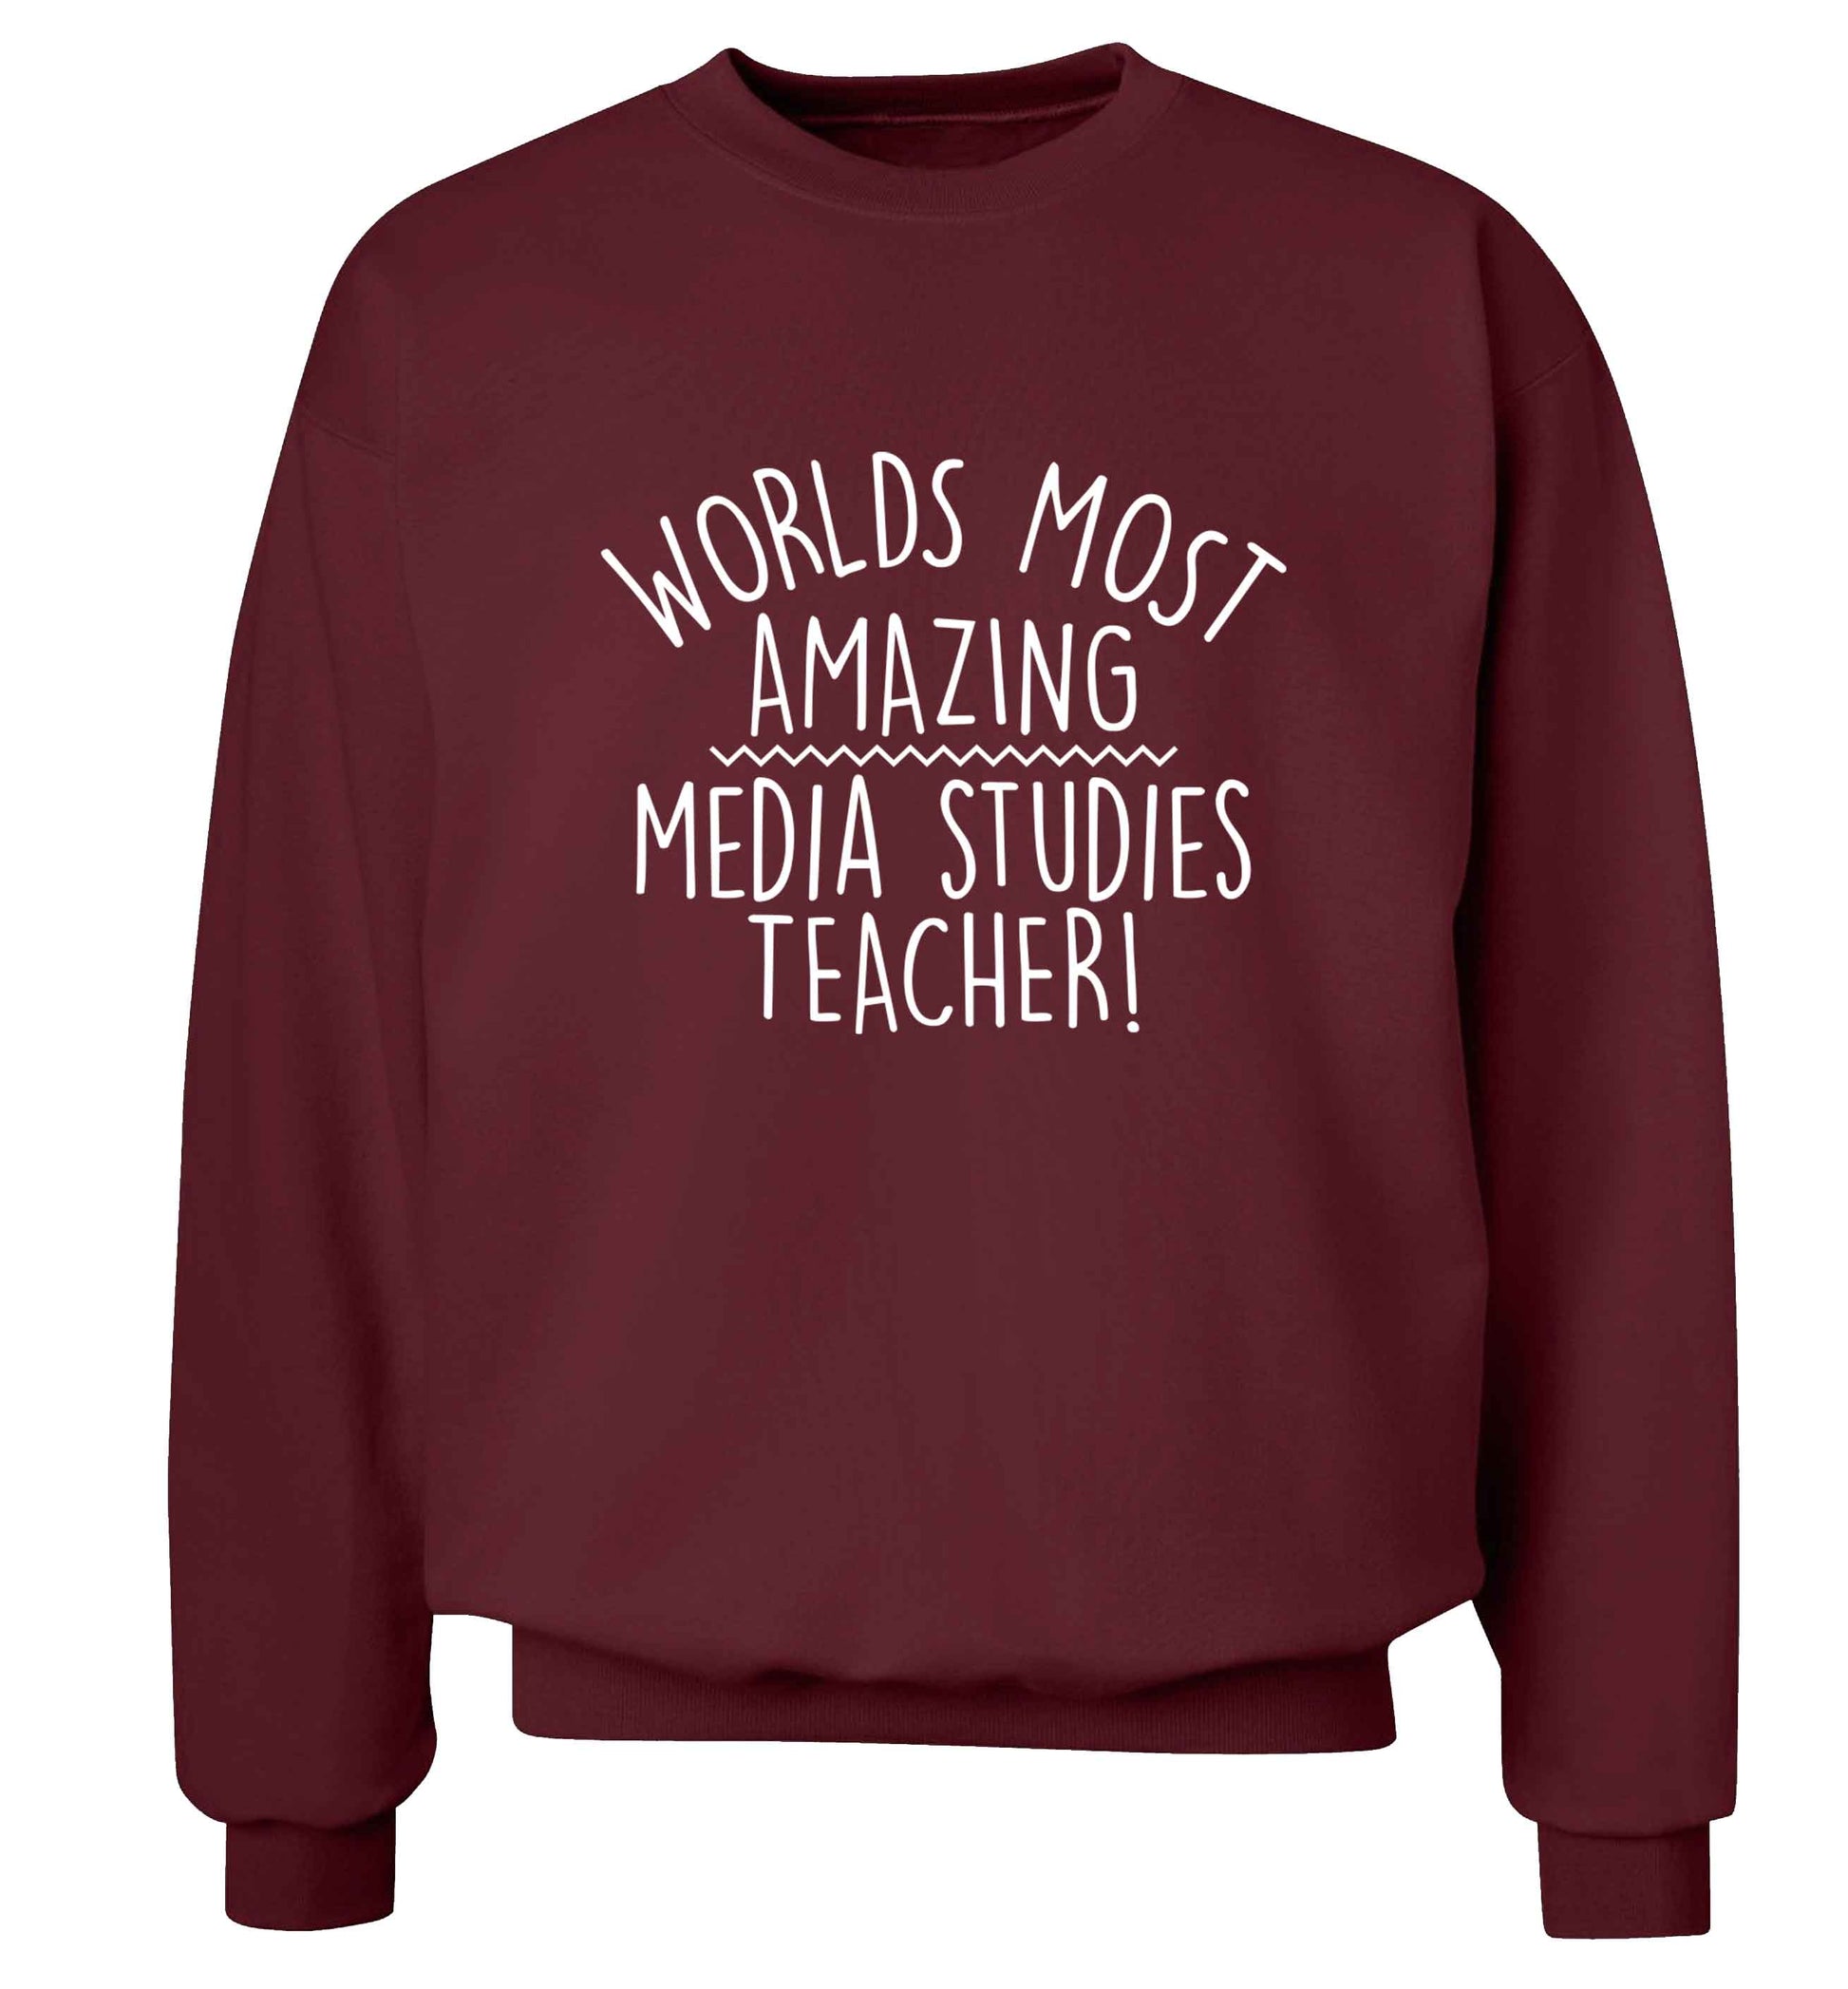 Worlds most amazing media studies teacher adult's unisex maroon sweater 2XL